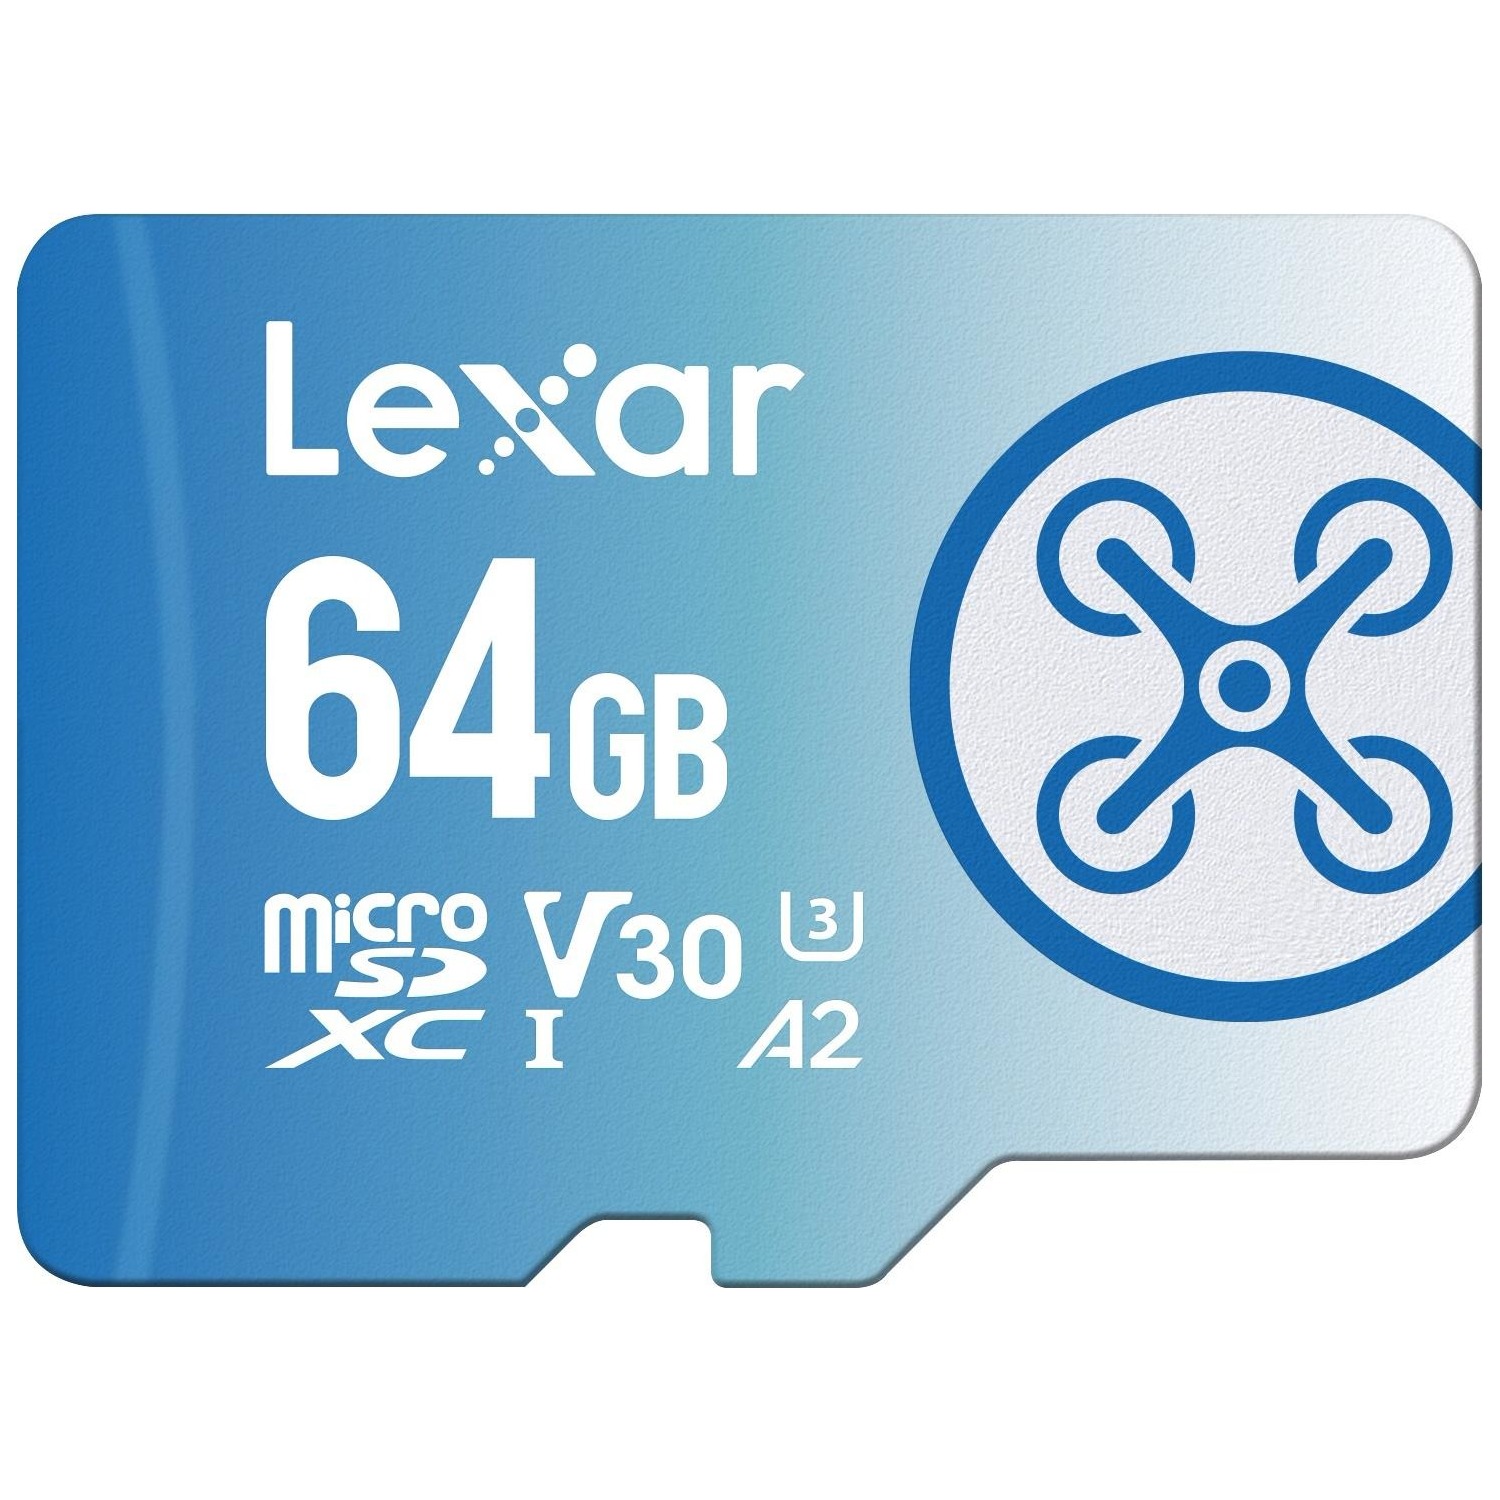 Immagine per MicroSD Lexar FLY 64GB UHS-I A2 V30 da DIMOStore